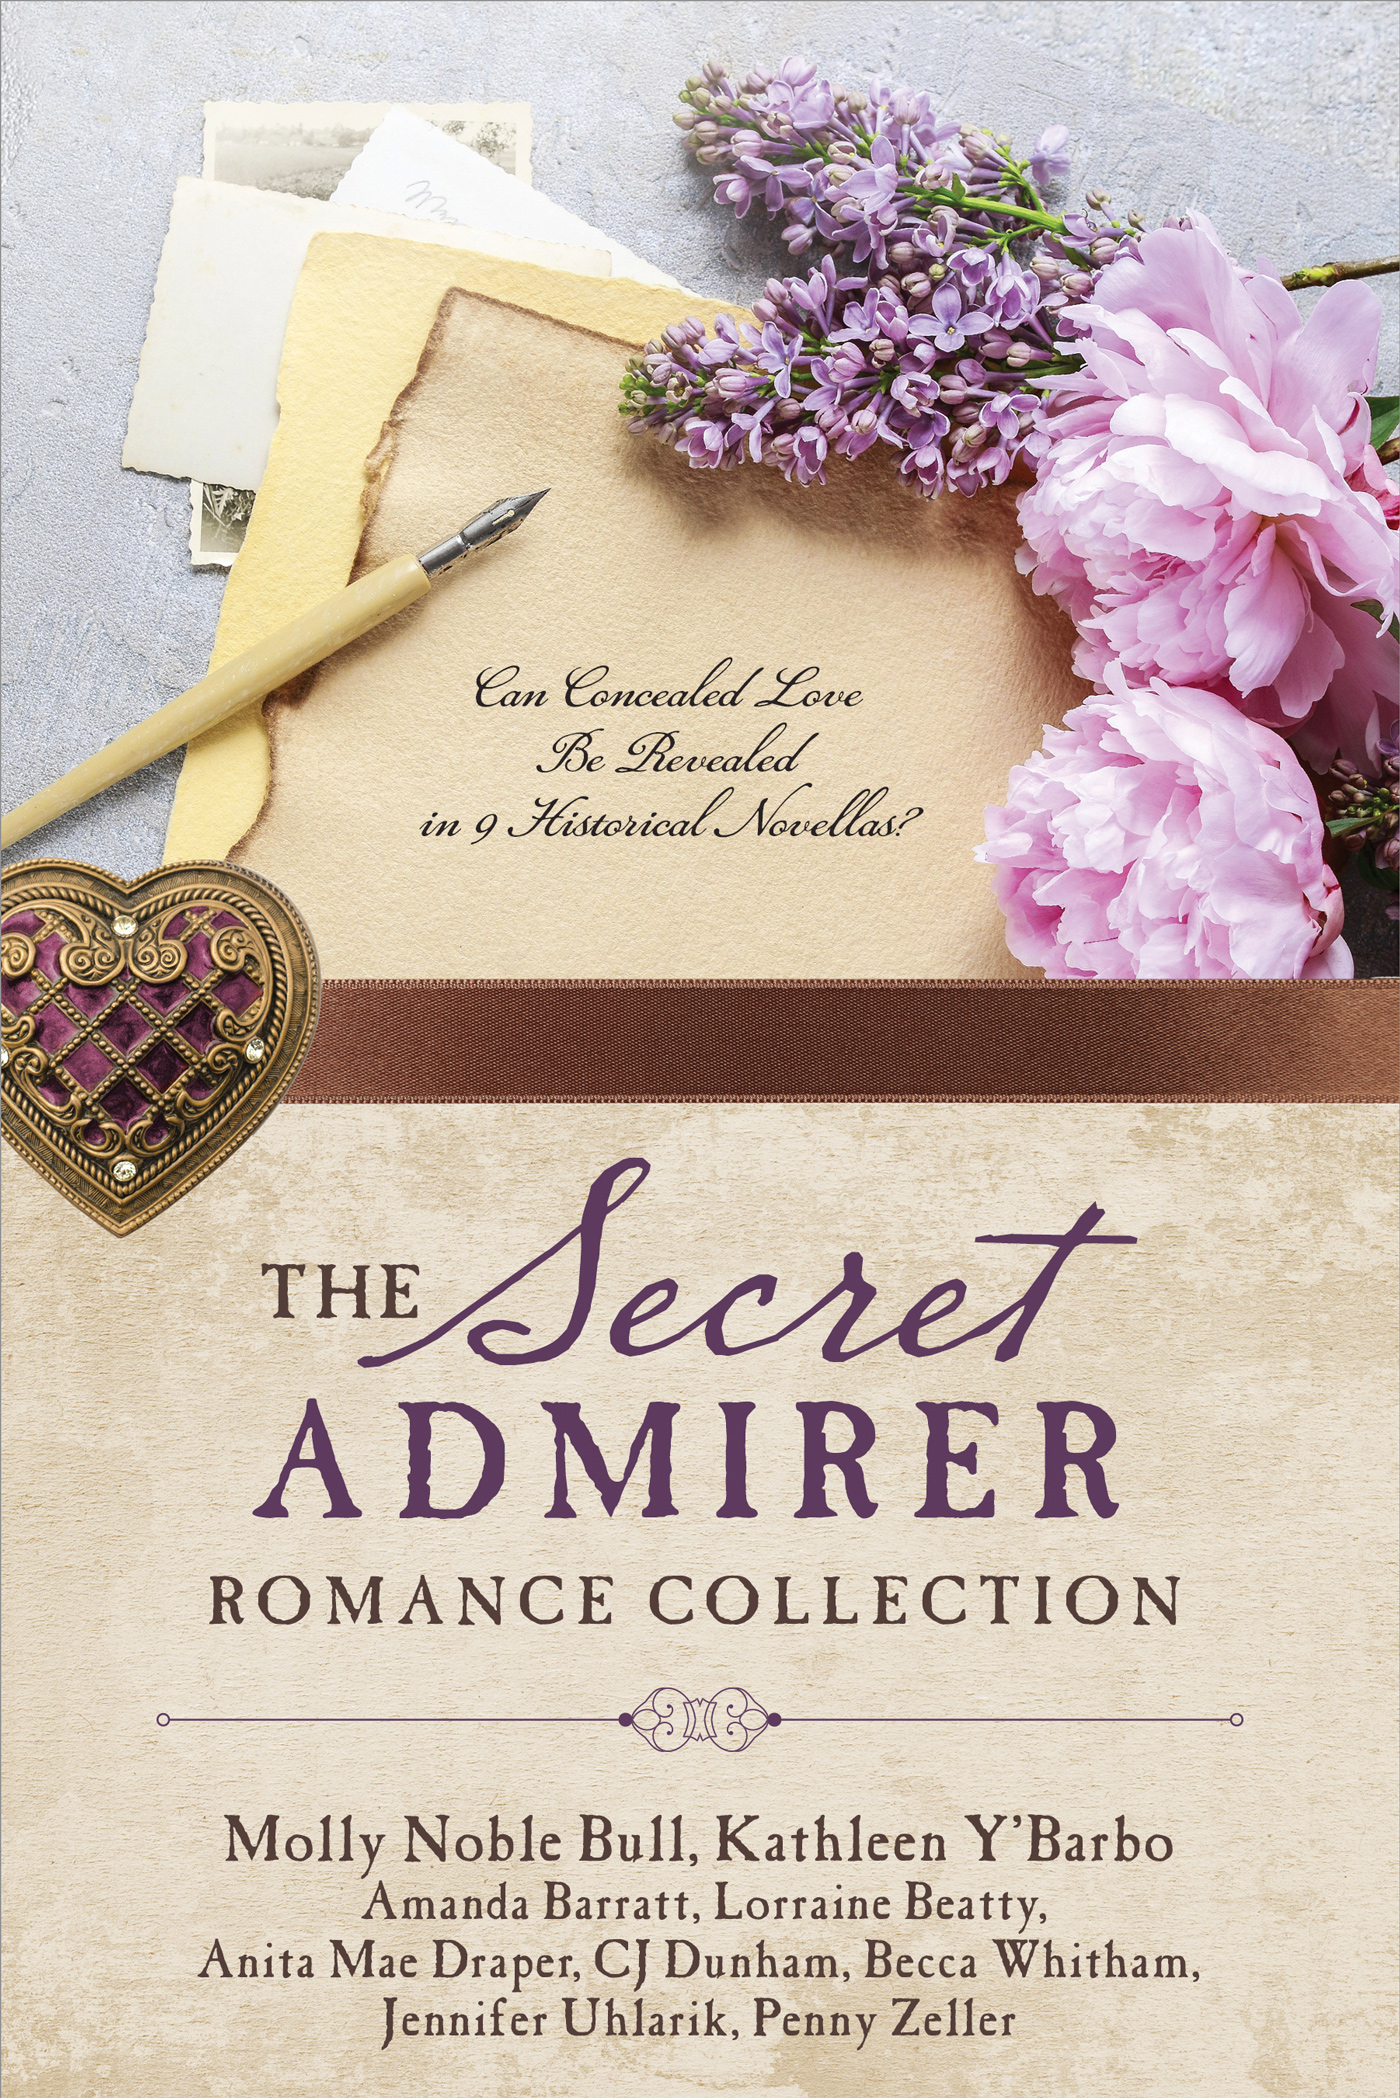 The Secret Admirer